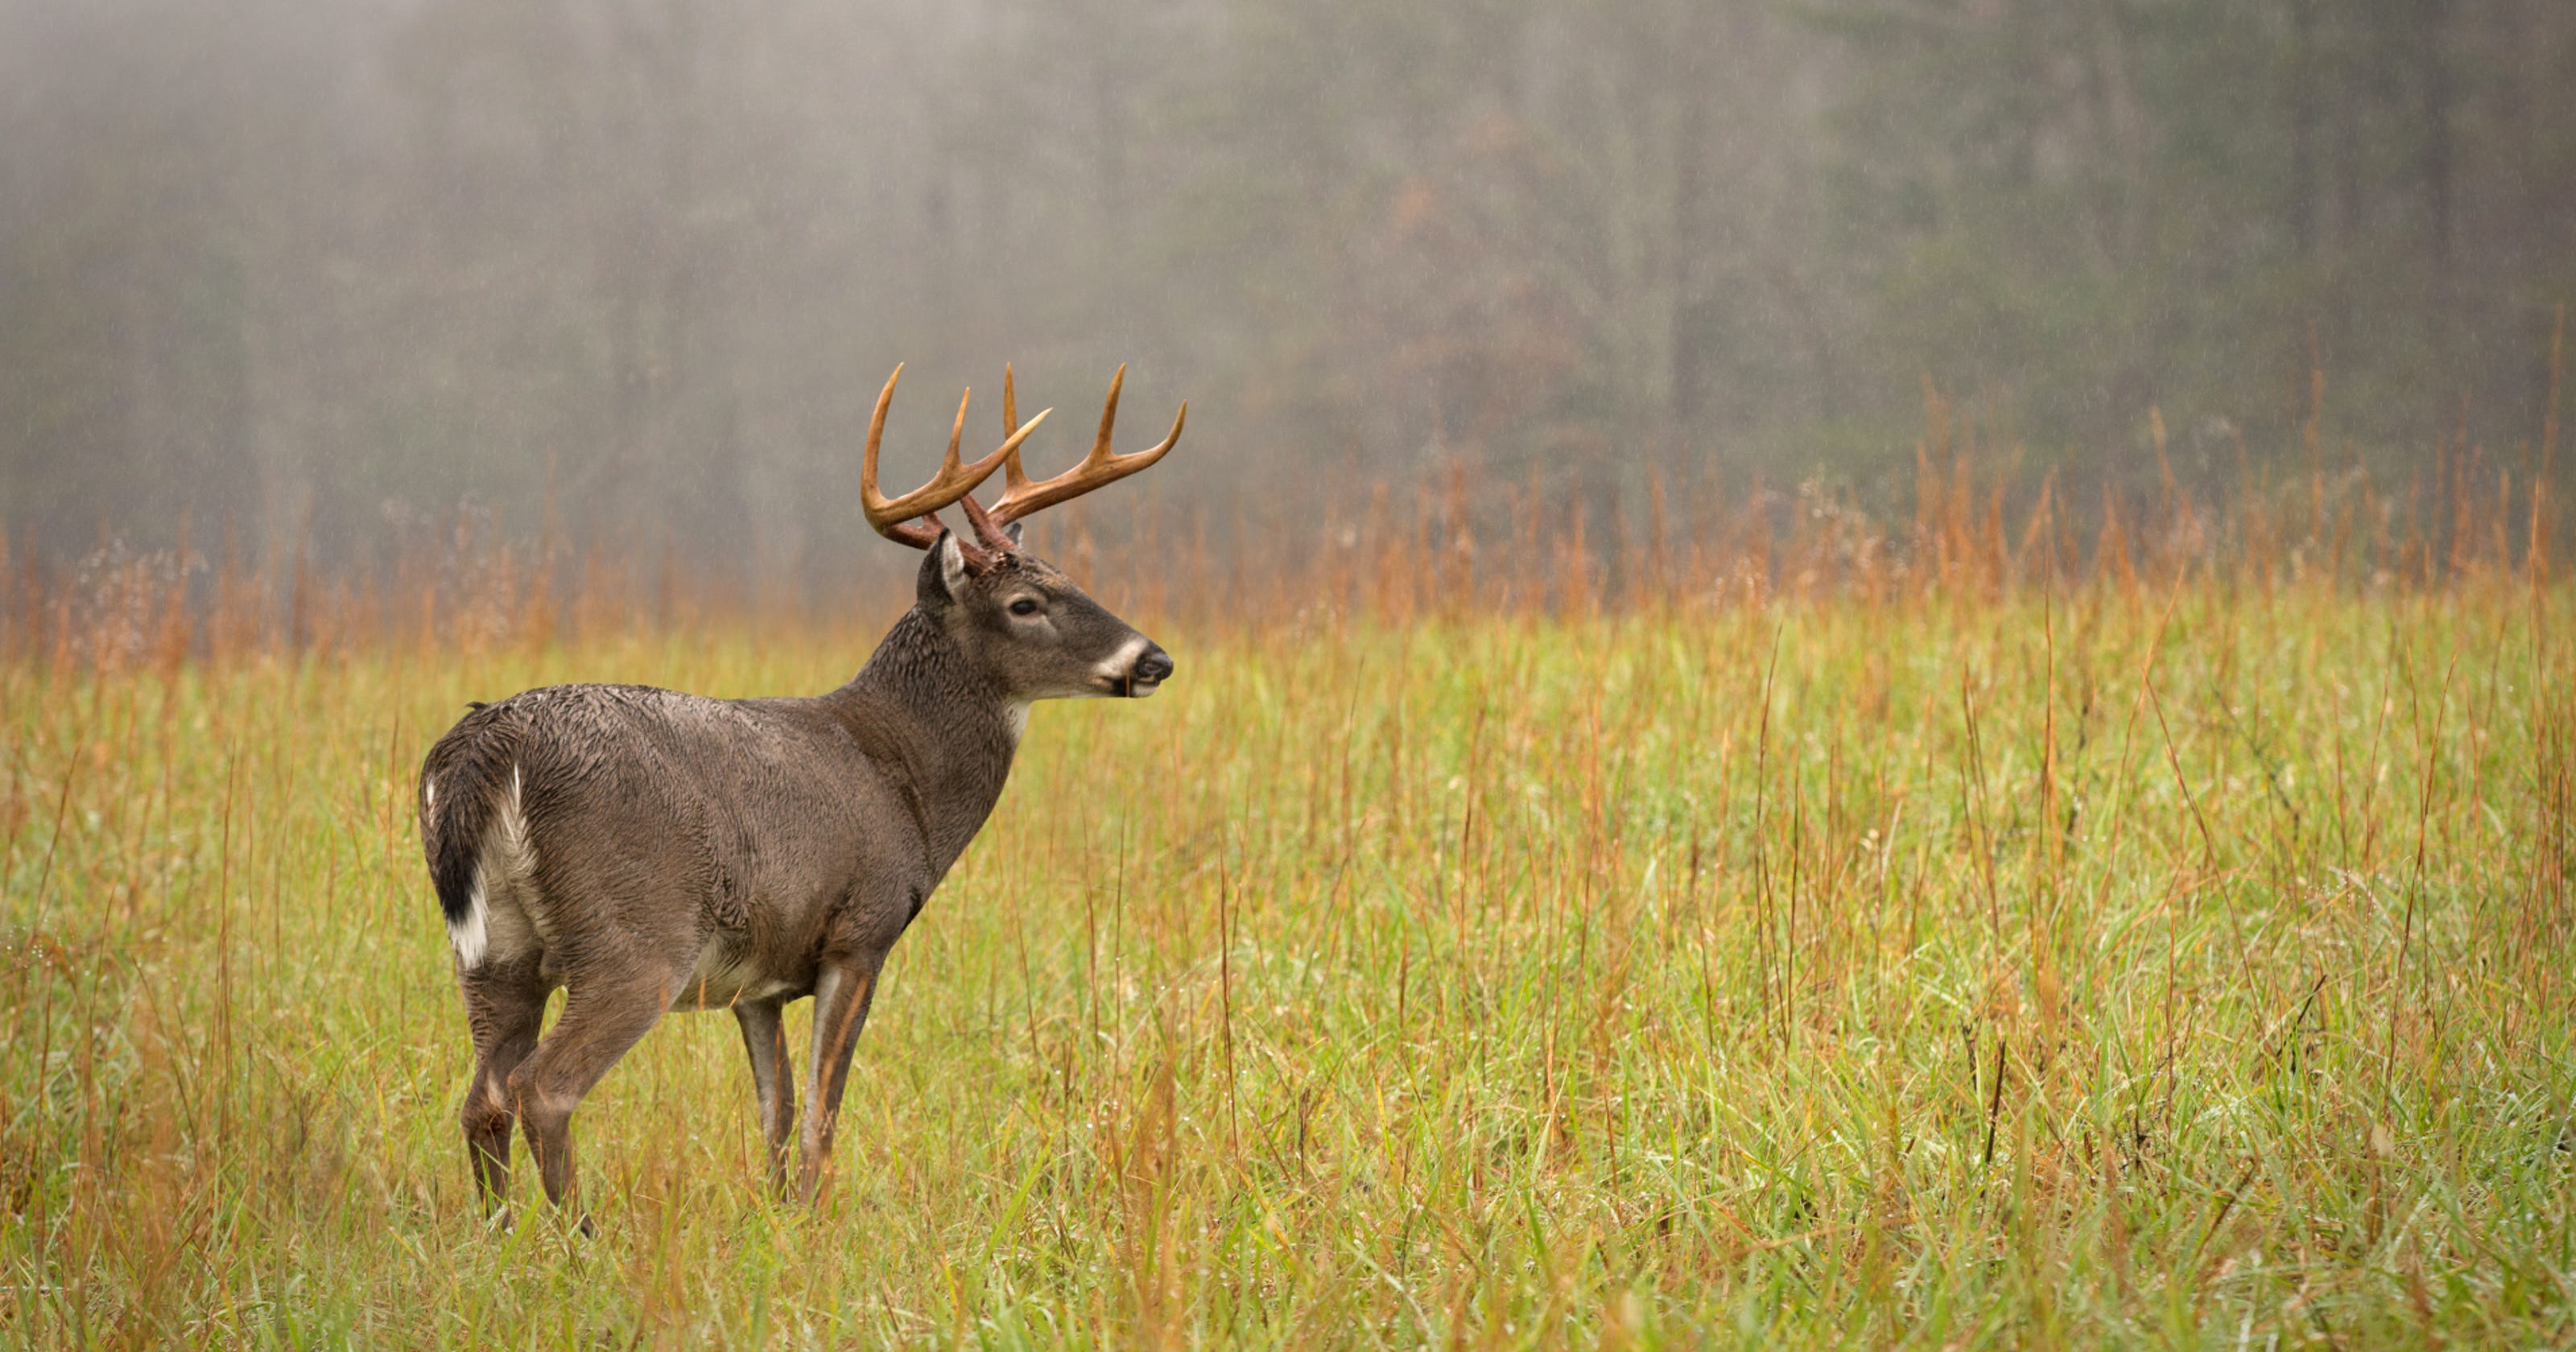 Tip leads Iowa investigators to Michigan poachers that took 19 deer